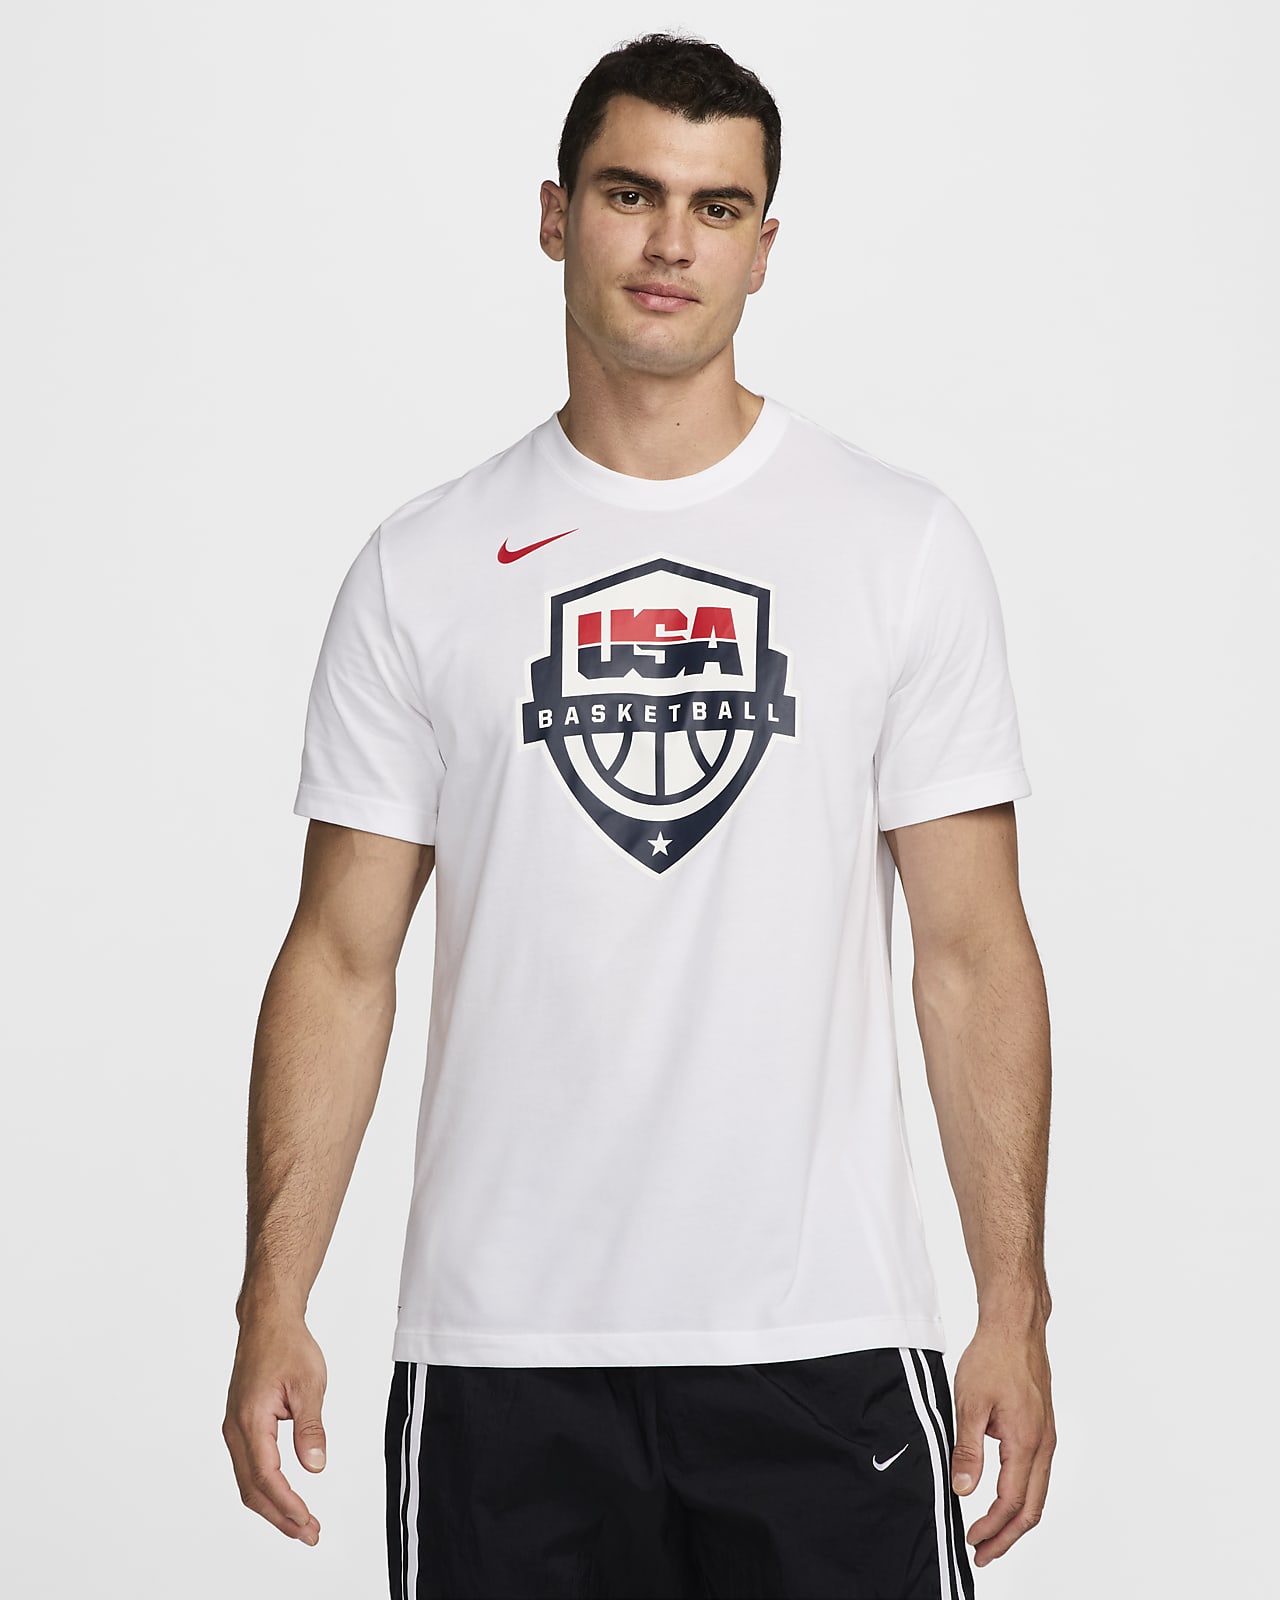 USAB Men's Nike Dri-FIT Basketball T-Shirt